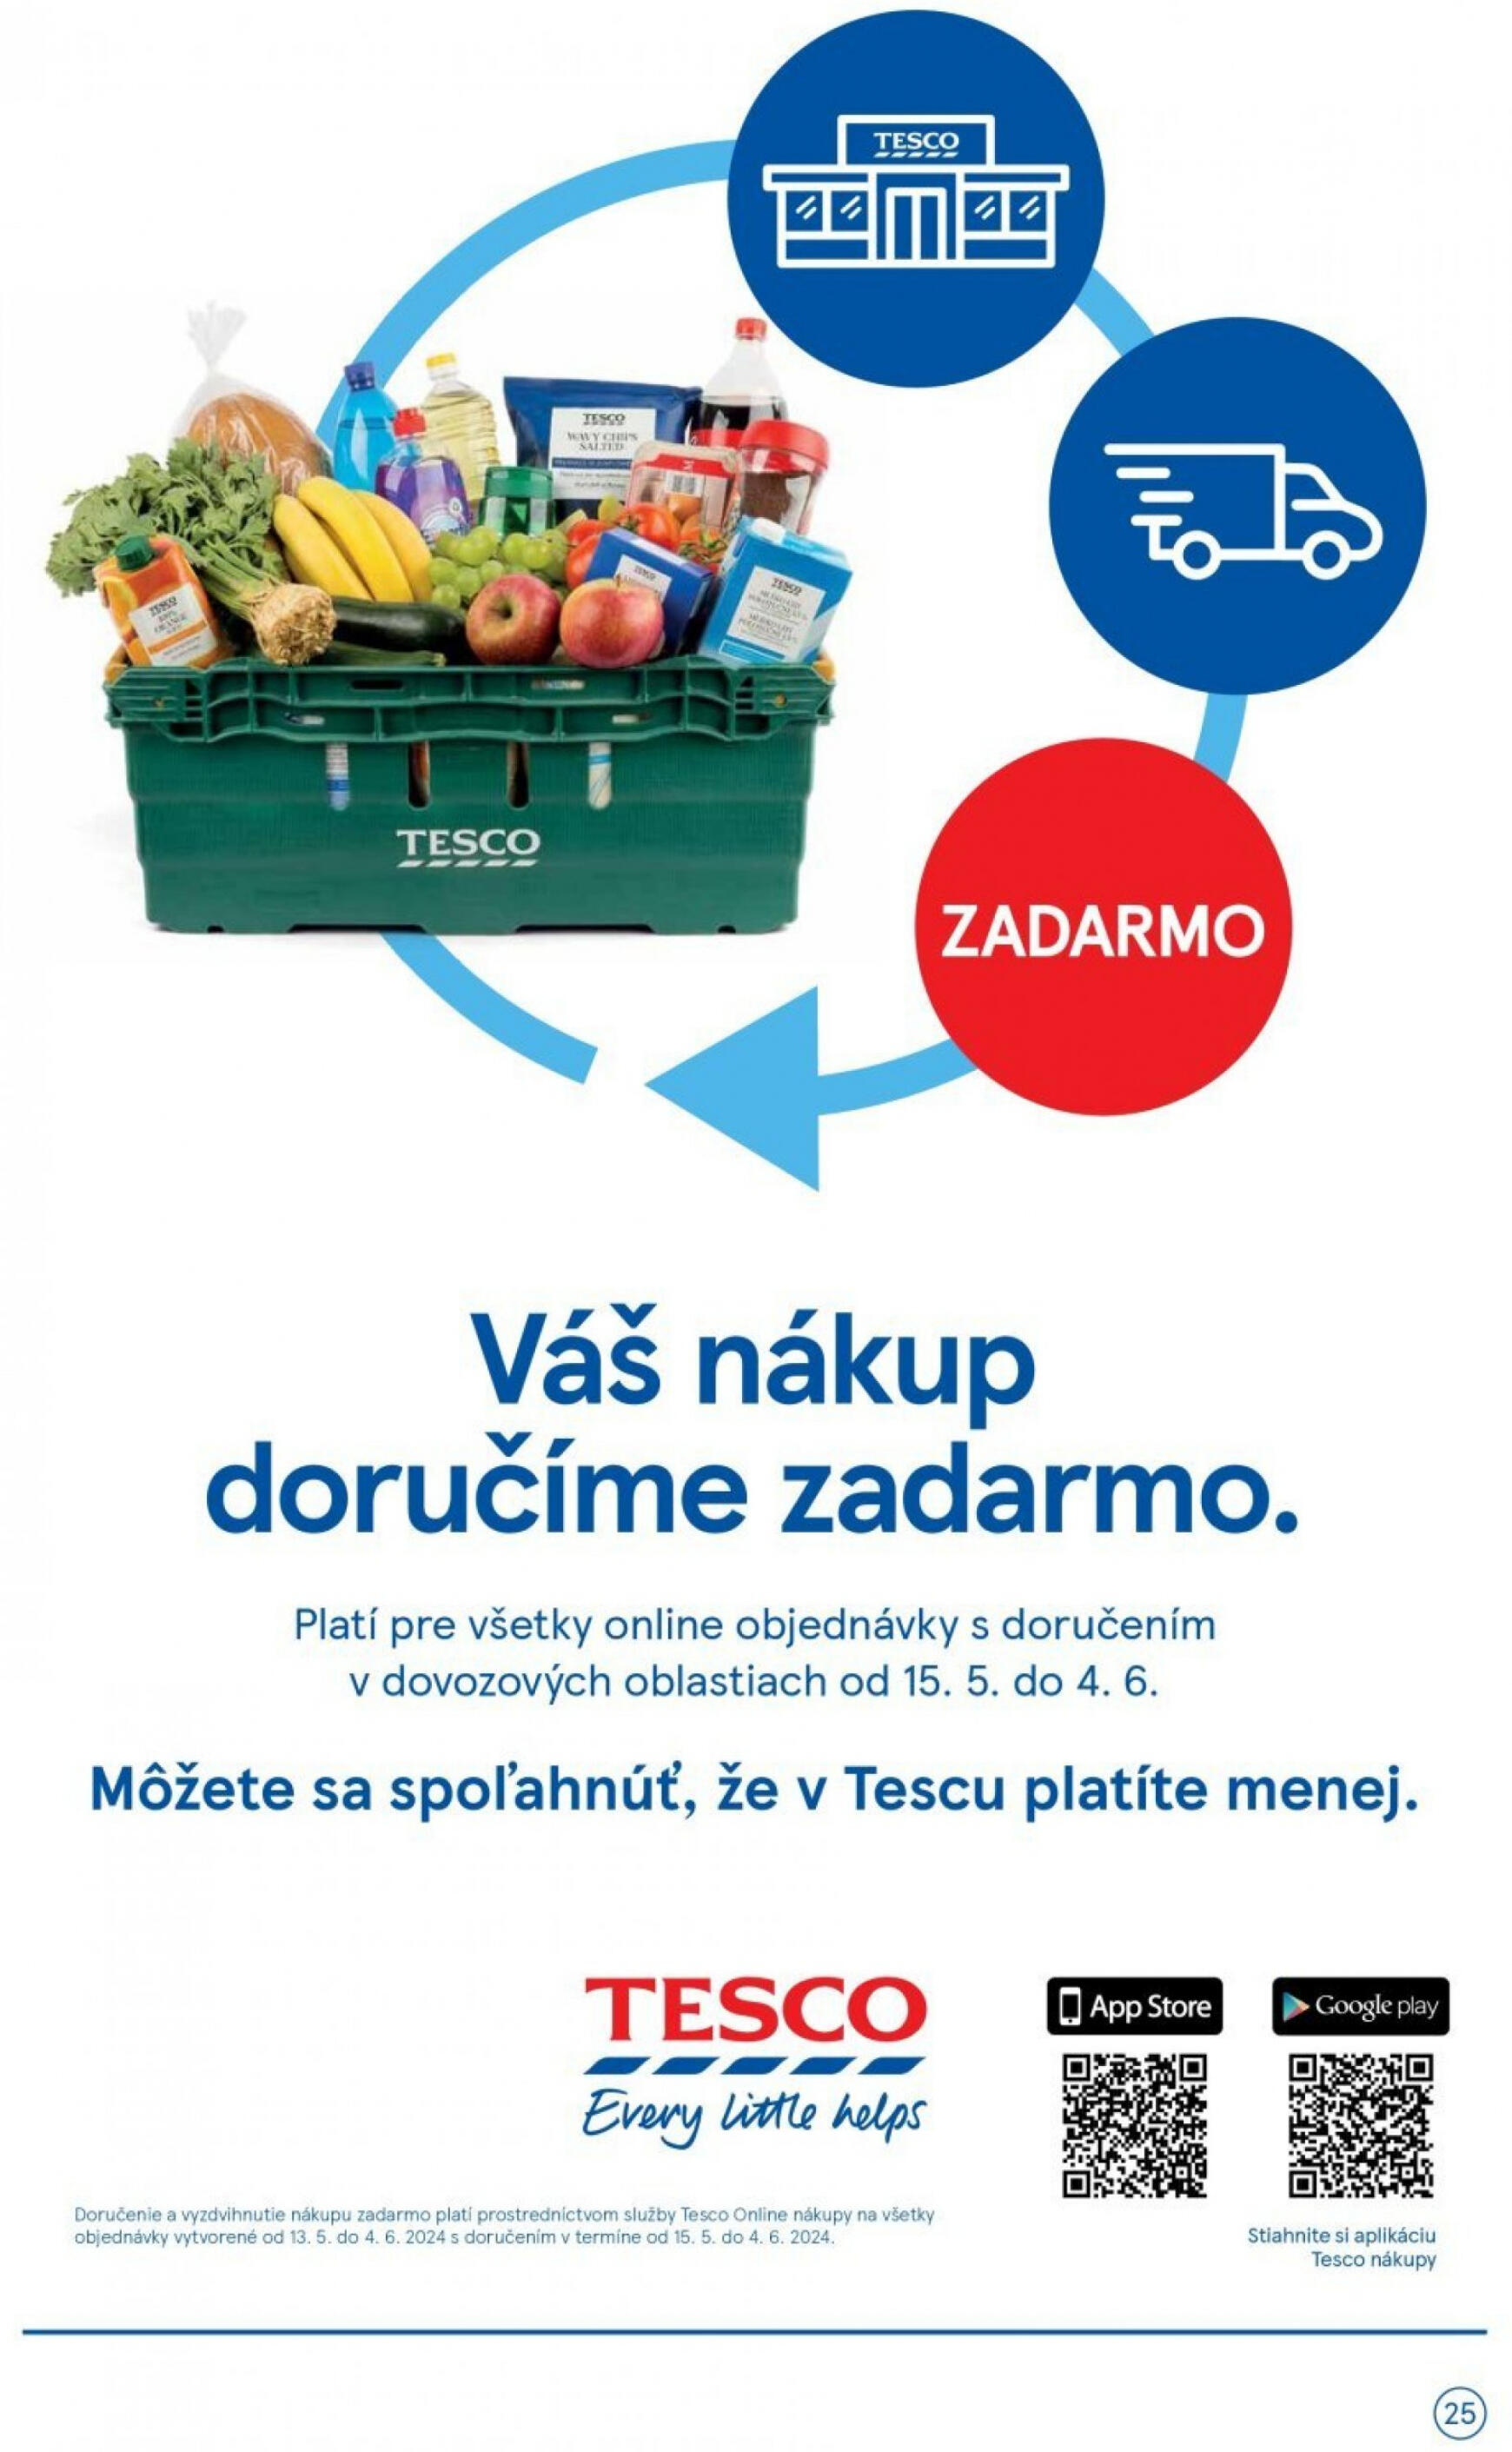 tesco - Tesco supermarket leták platný od 15.05. - 21.05. - page: 25